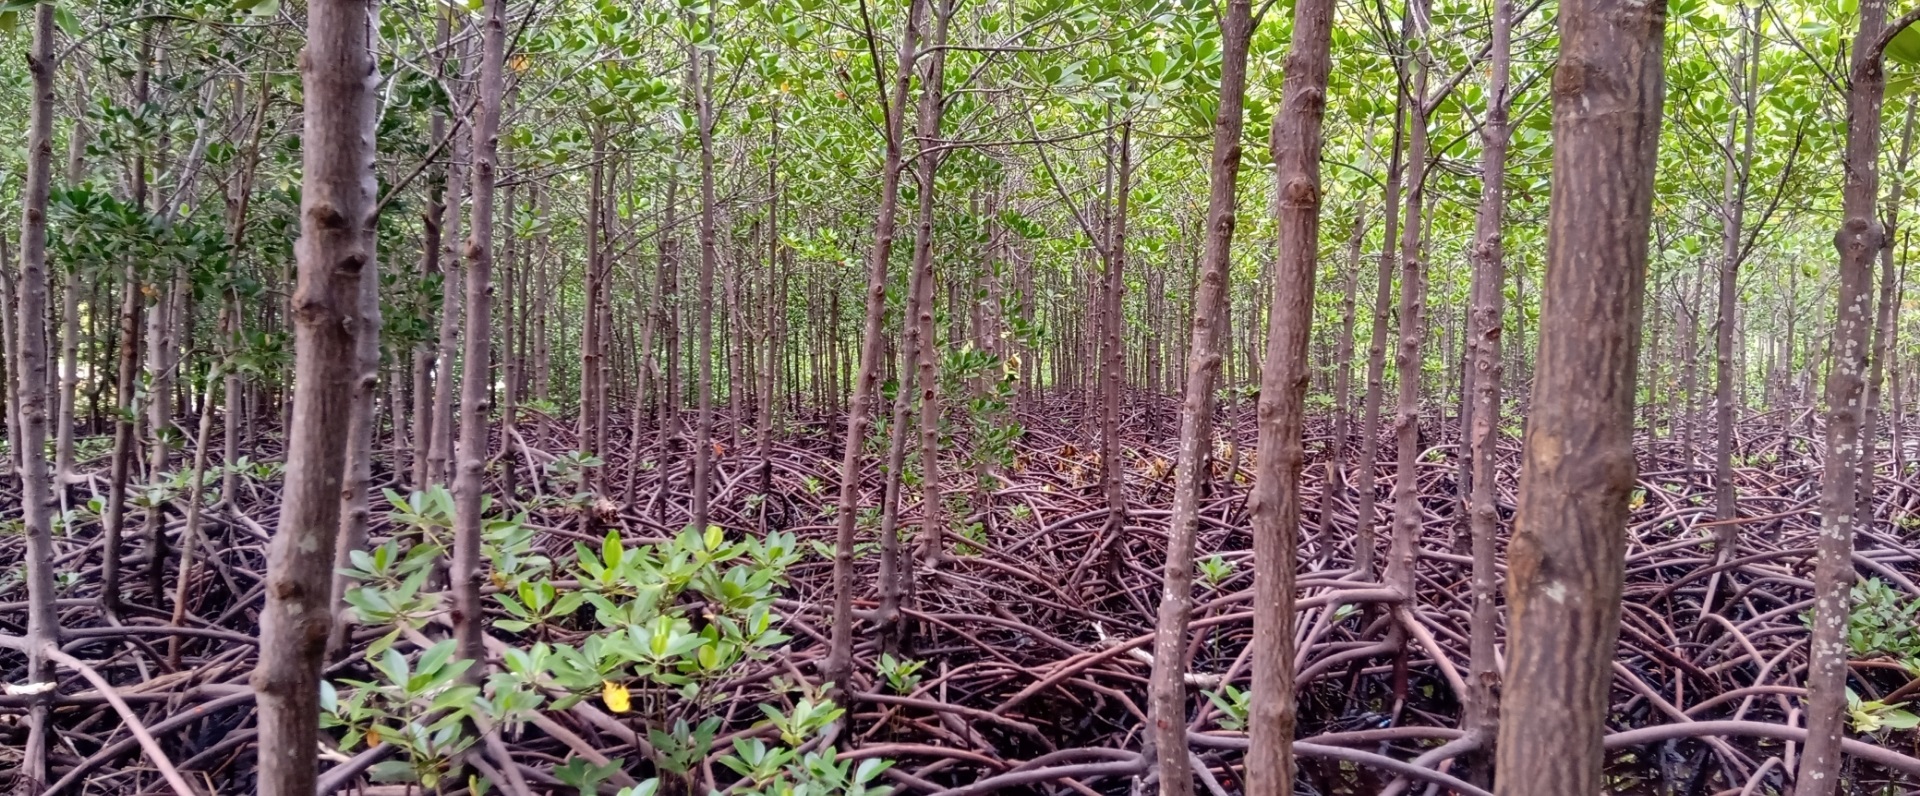 A 21 years old Rhizophora mangrove plantation at Gazi Bay, Kenya